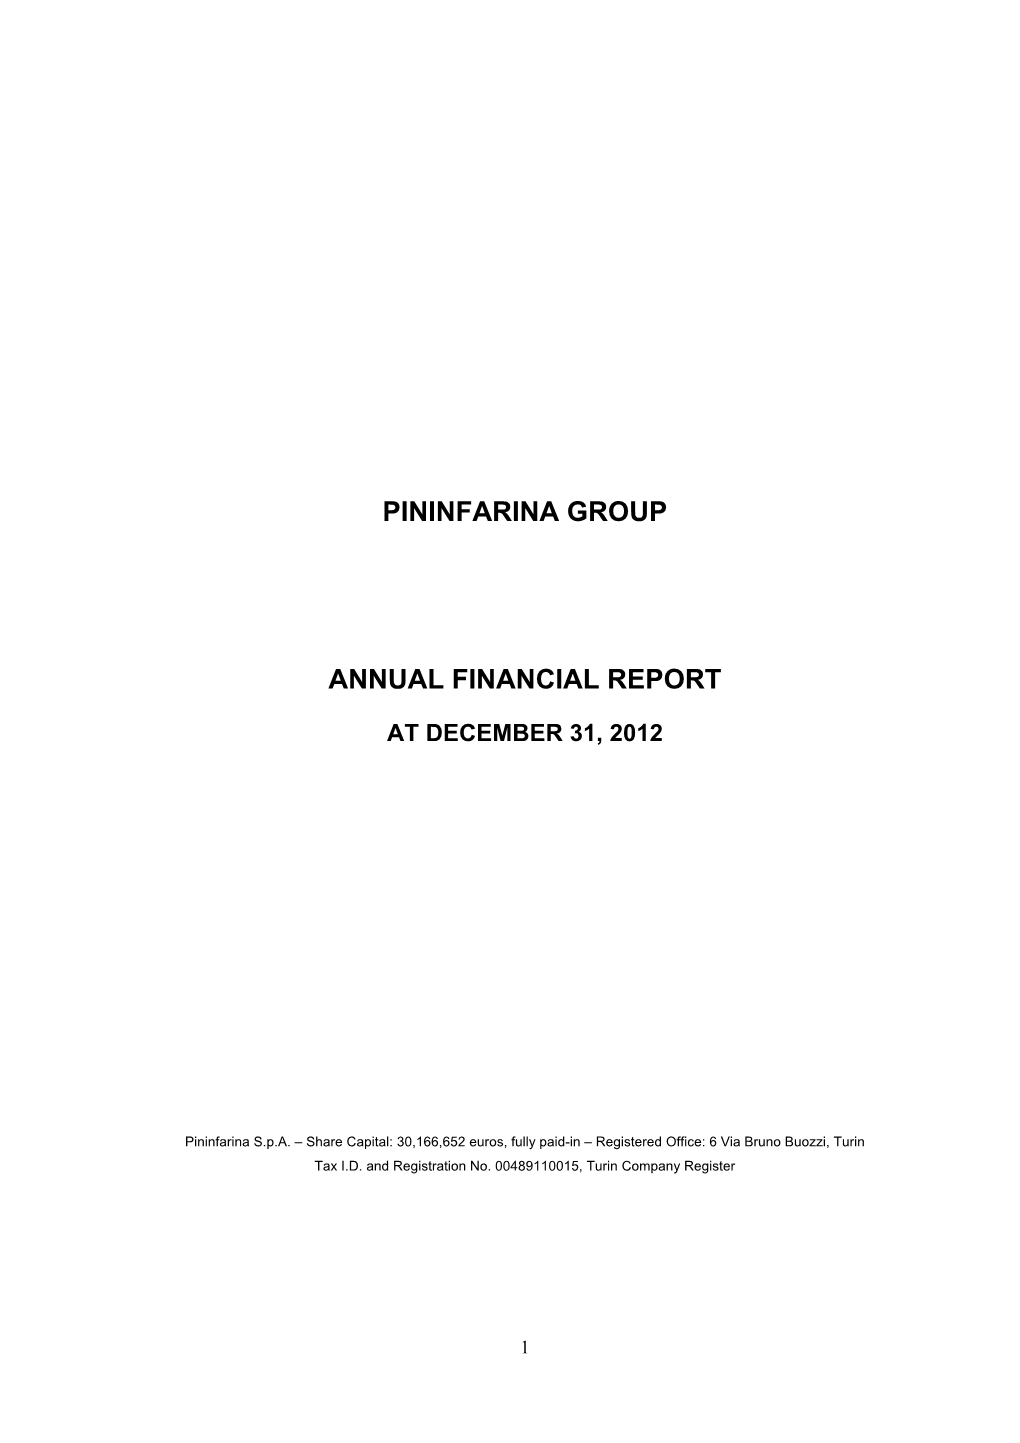 Pininfarina Group Annual Financial Report